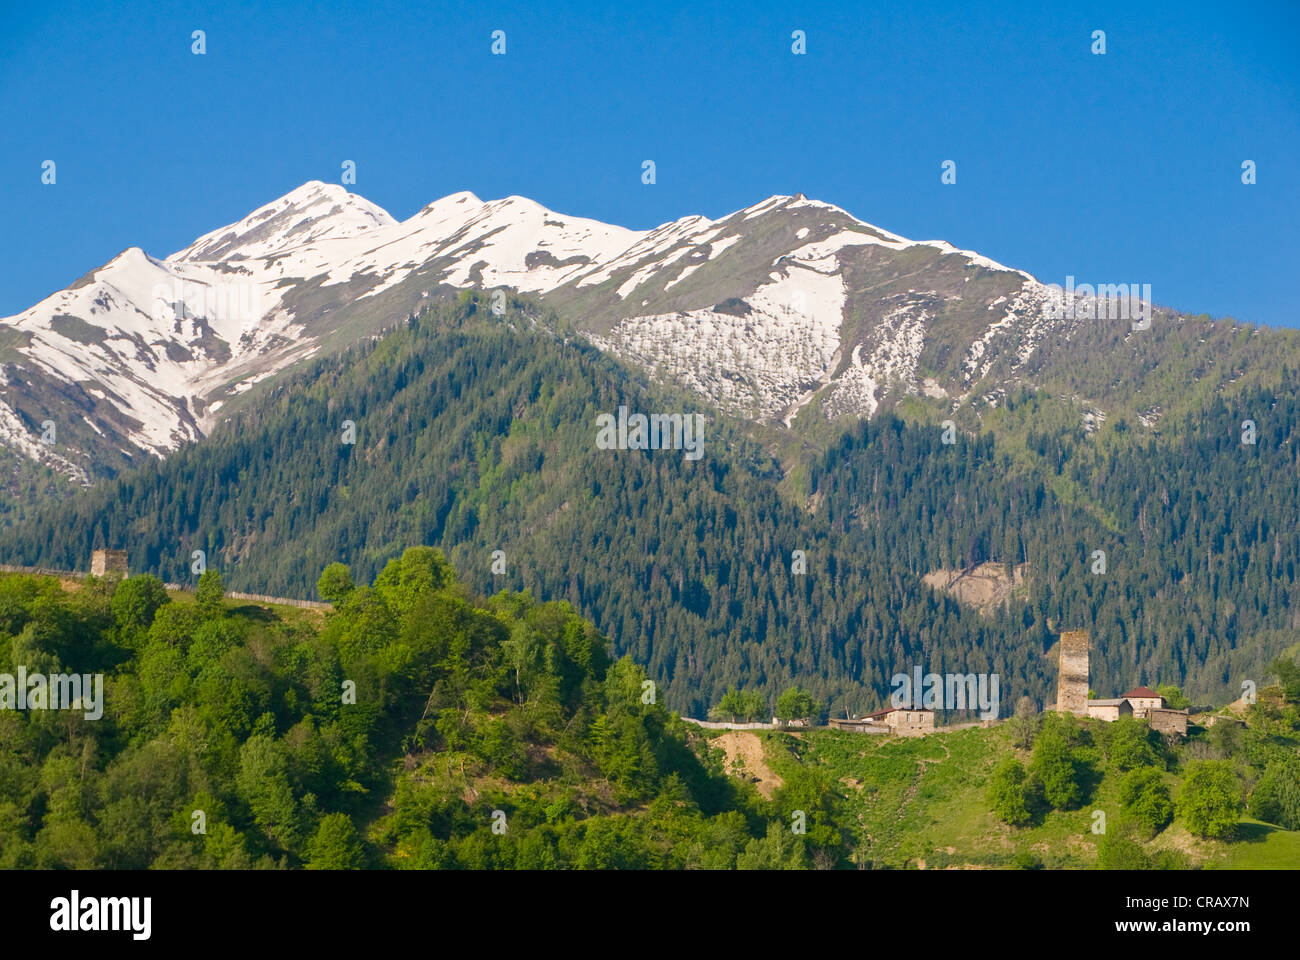 Mountain landscape, Svaneti province, Georgia, Caucasus region, Middle East Stock Photo